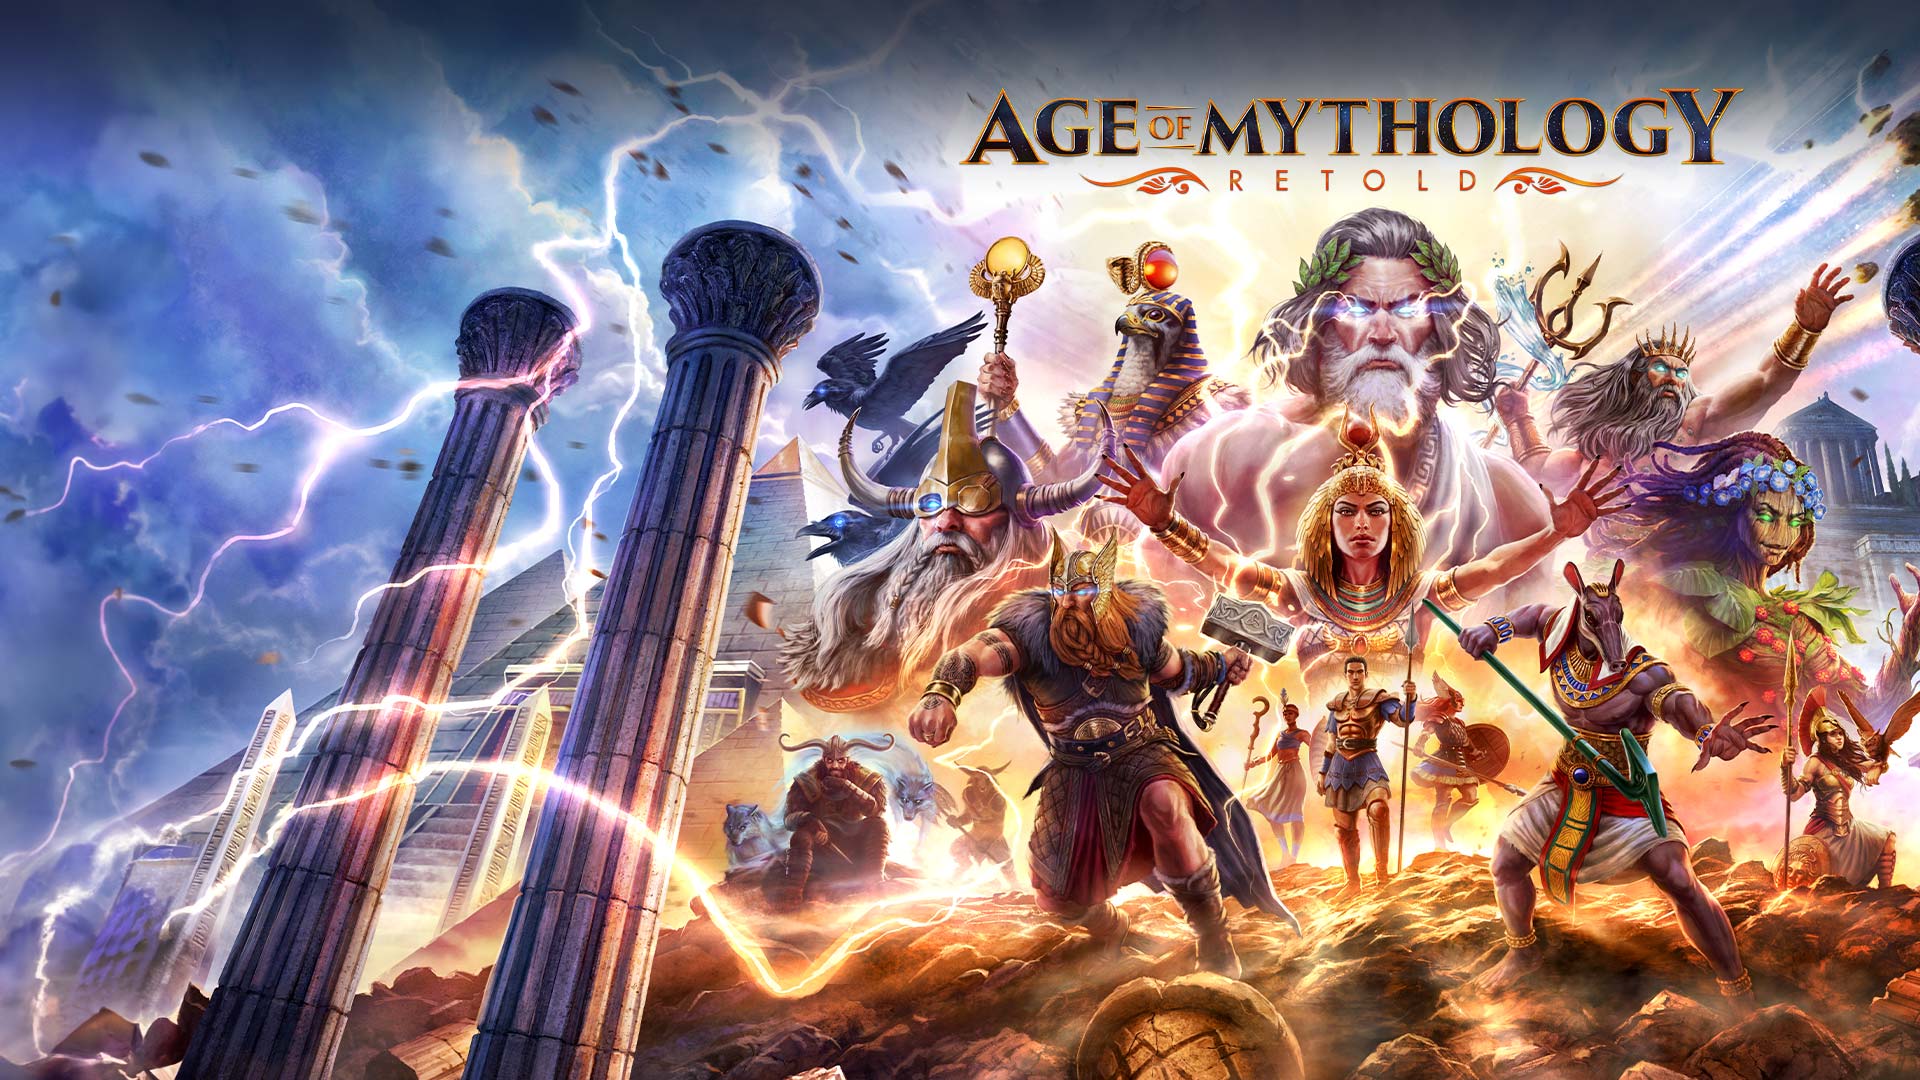 『Age of Mythology: Retold』のロゴ、空から様々な神々と神話が舞い降りる。